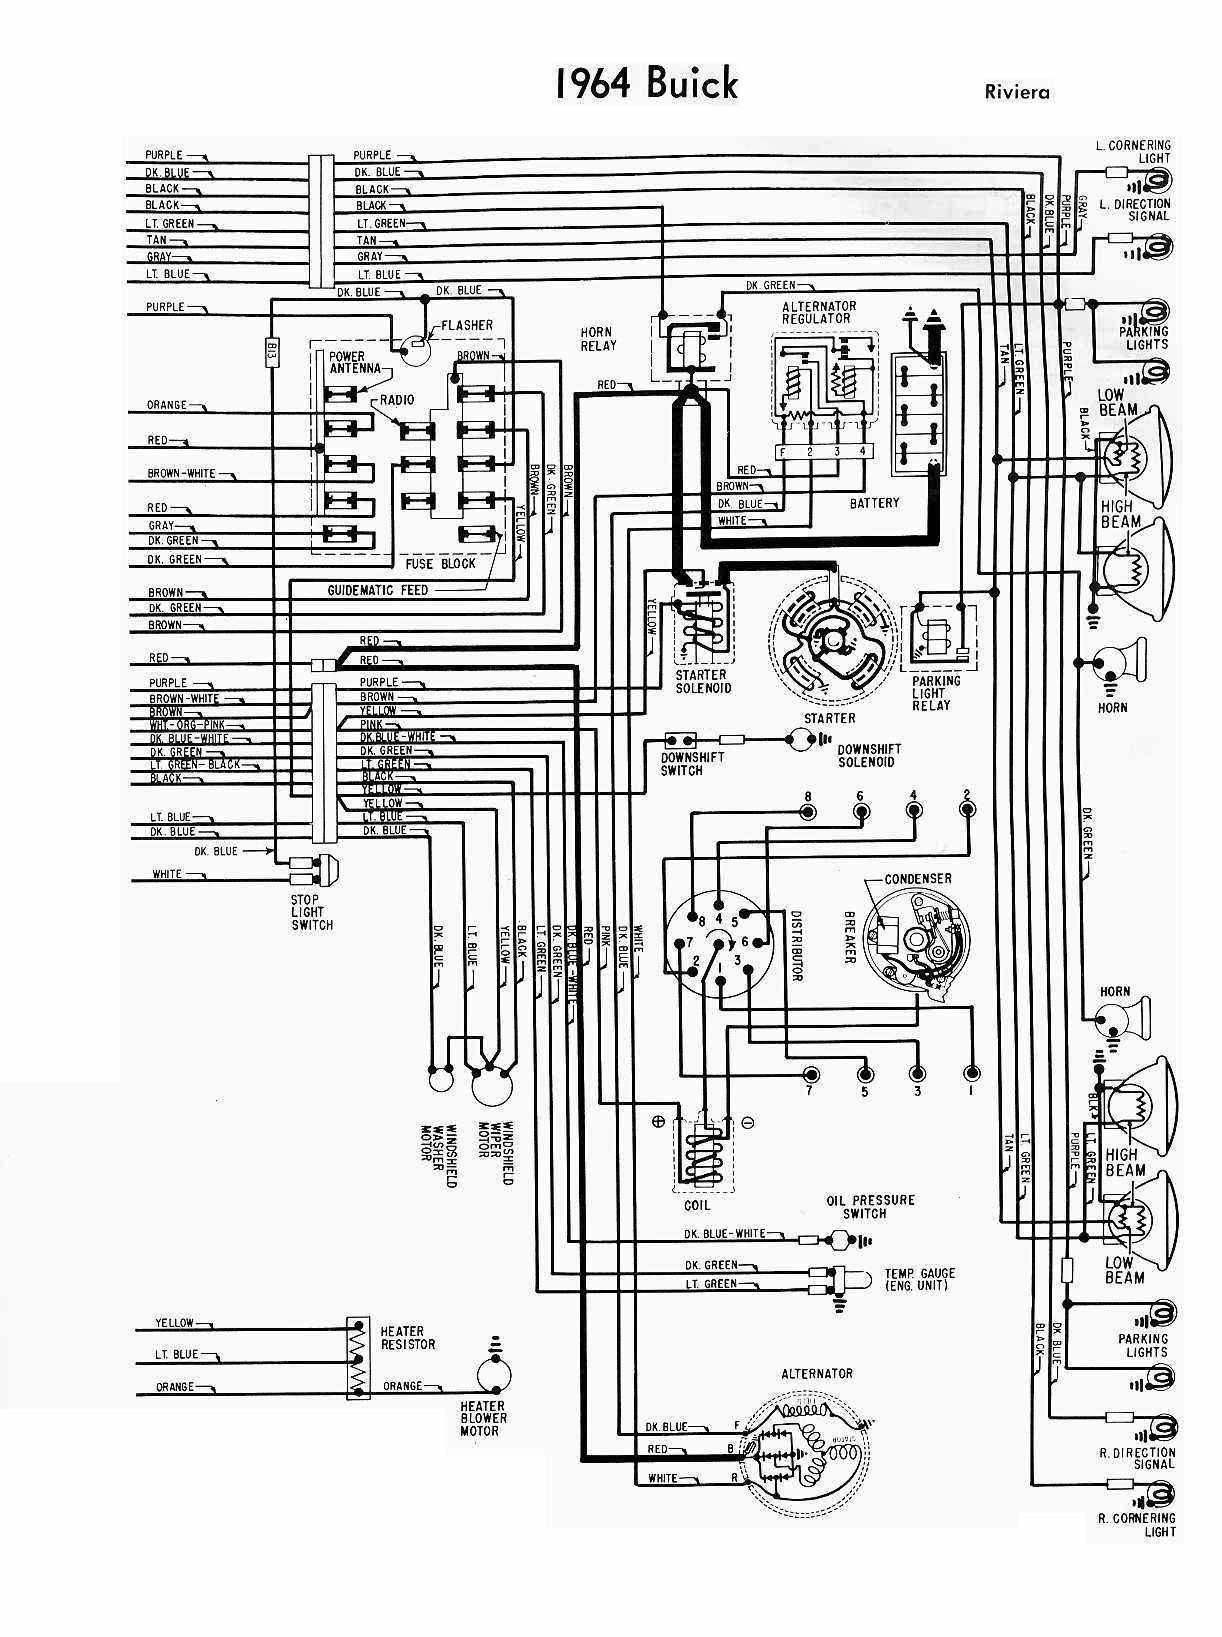 2002 Buick Century Wiring Diagram Buick Car Manuals Wiring Diagrams Pdf & Fault Codes Of 2002 Buick Century Wiring Diagram